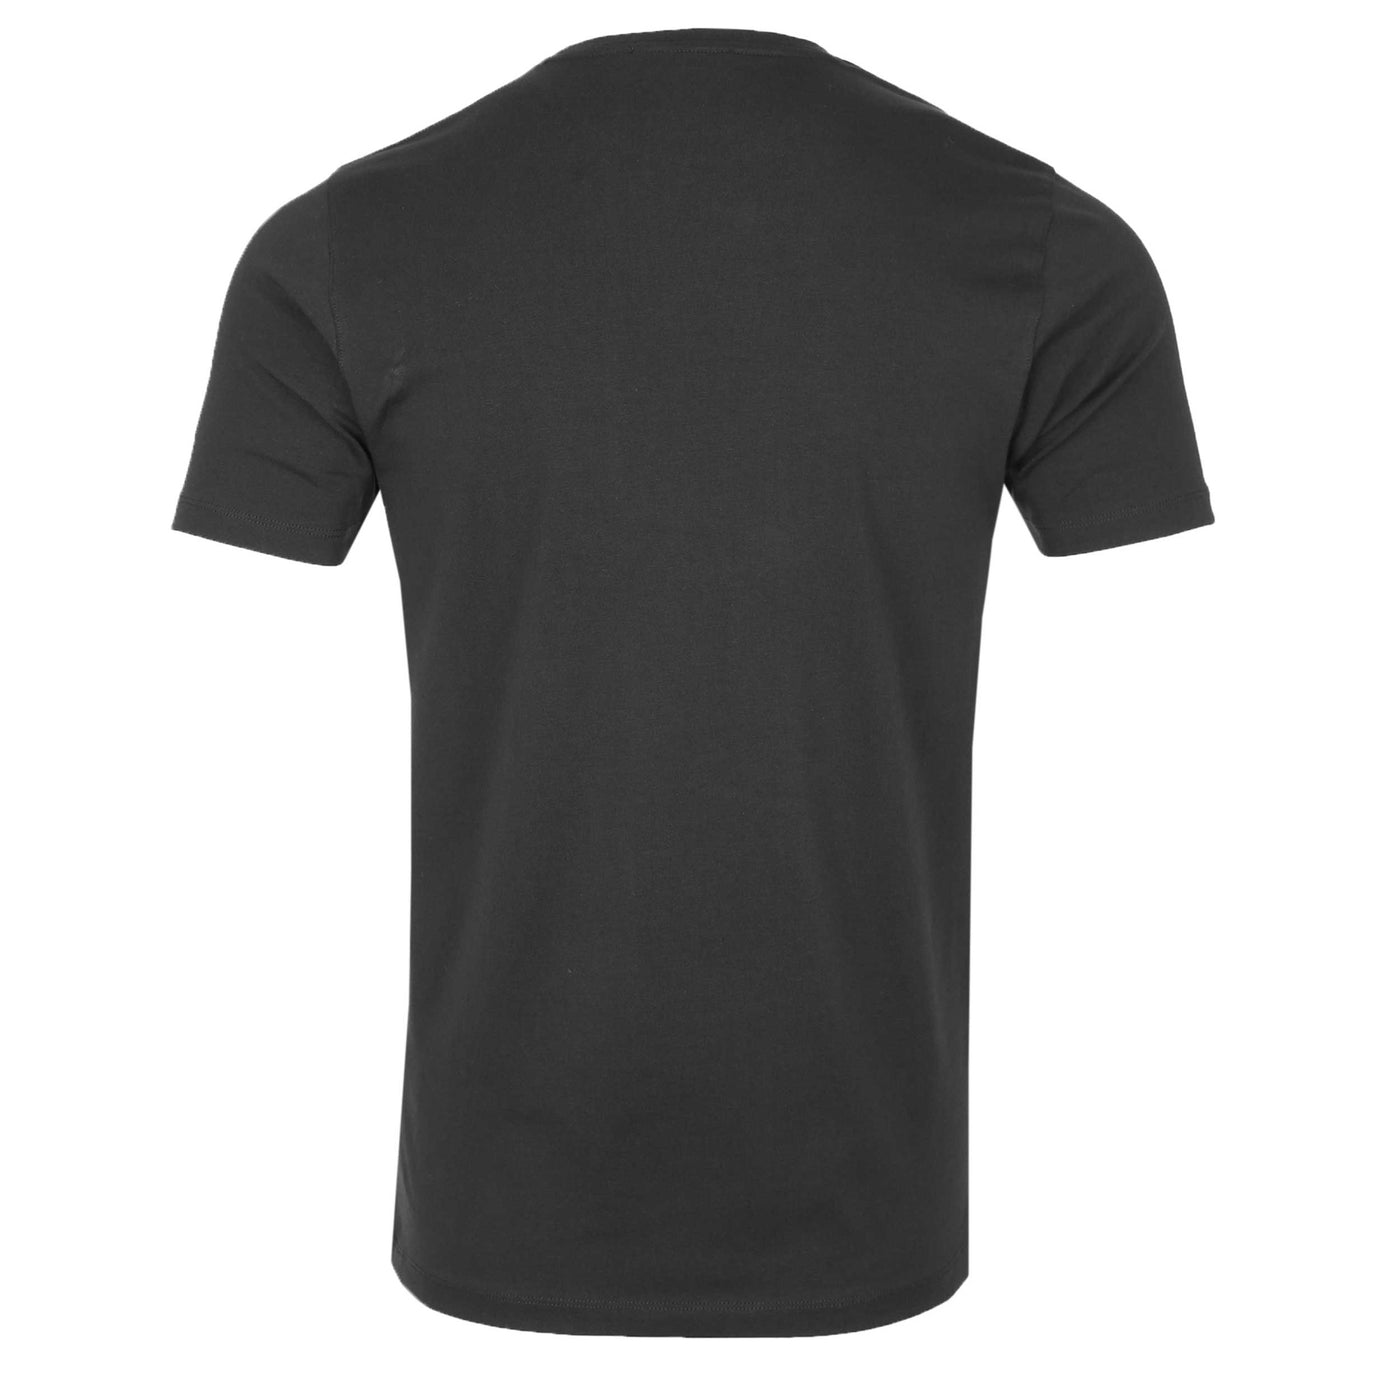 Remus Uomo Basic Crew Neck T-Shirt in Black Back